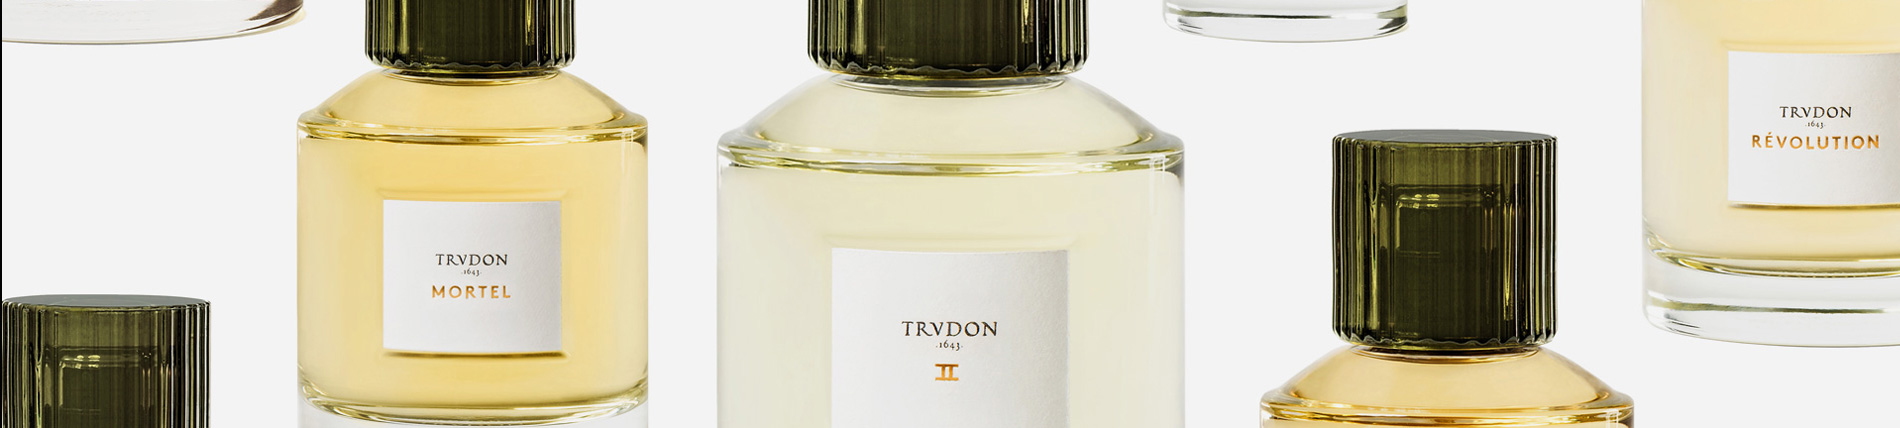 Parfum Trudon - incenza